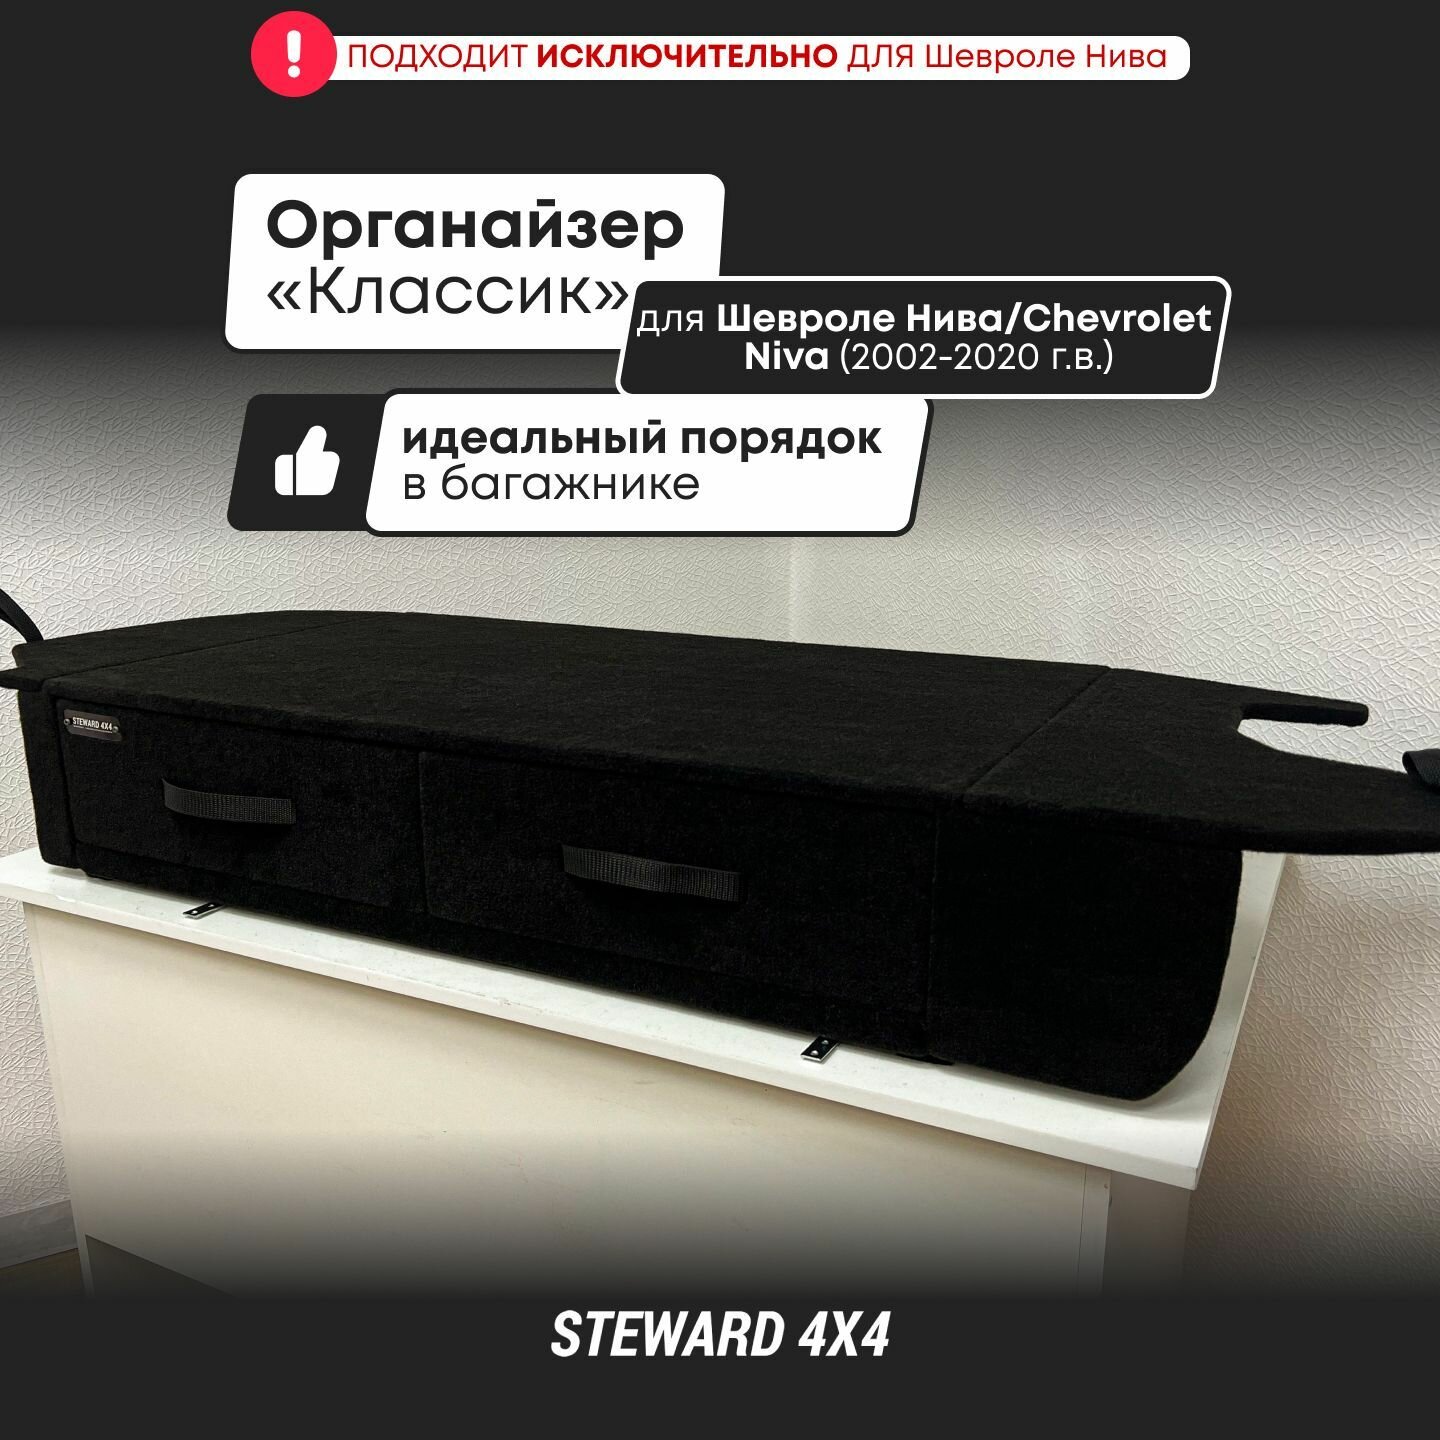 STEWARD 4Х4 / Органайзер "Классик" для авто Шевроле Нива (2002-2020) / Chevrolet Niva